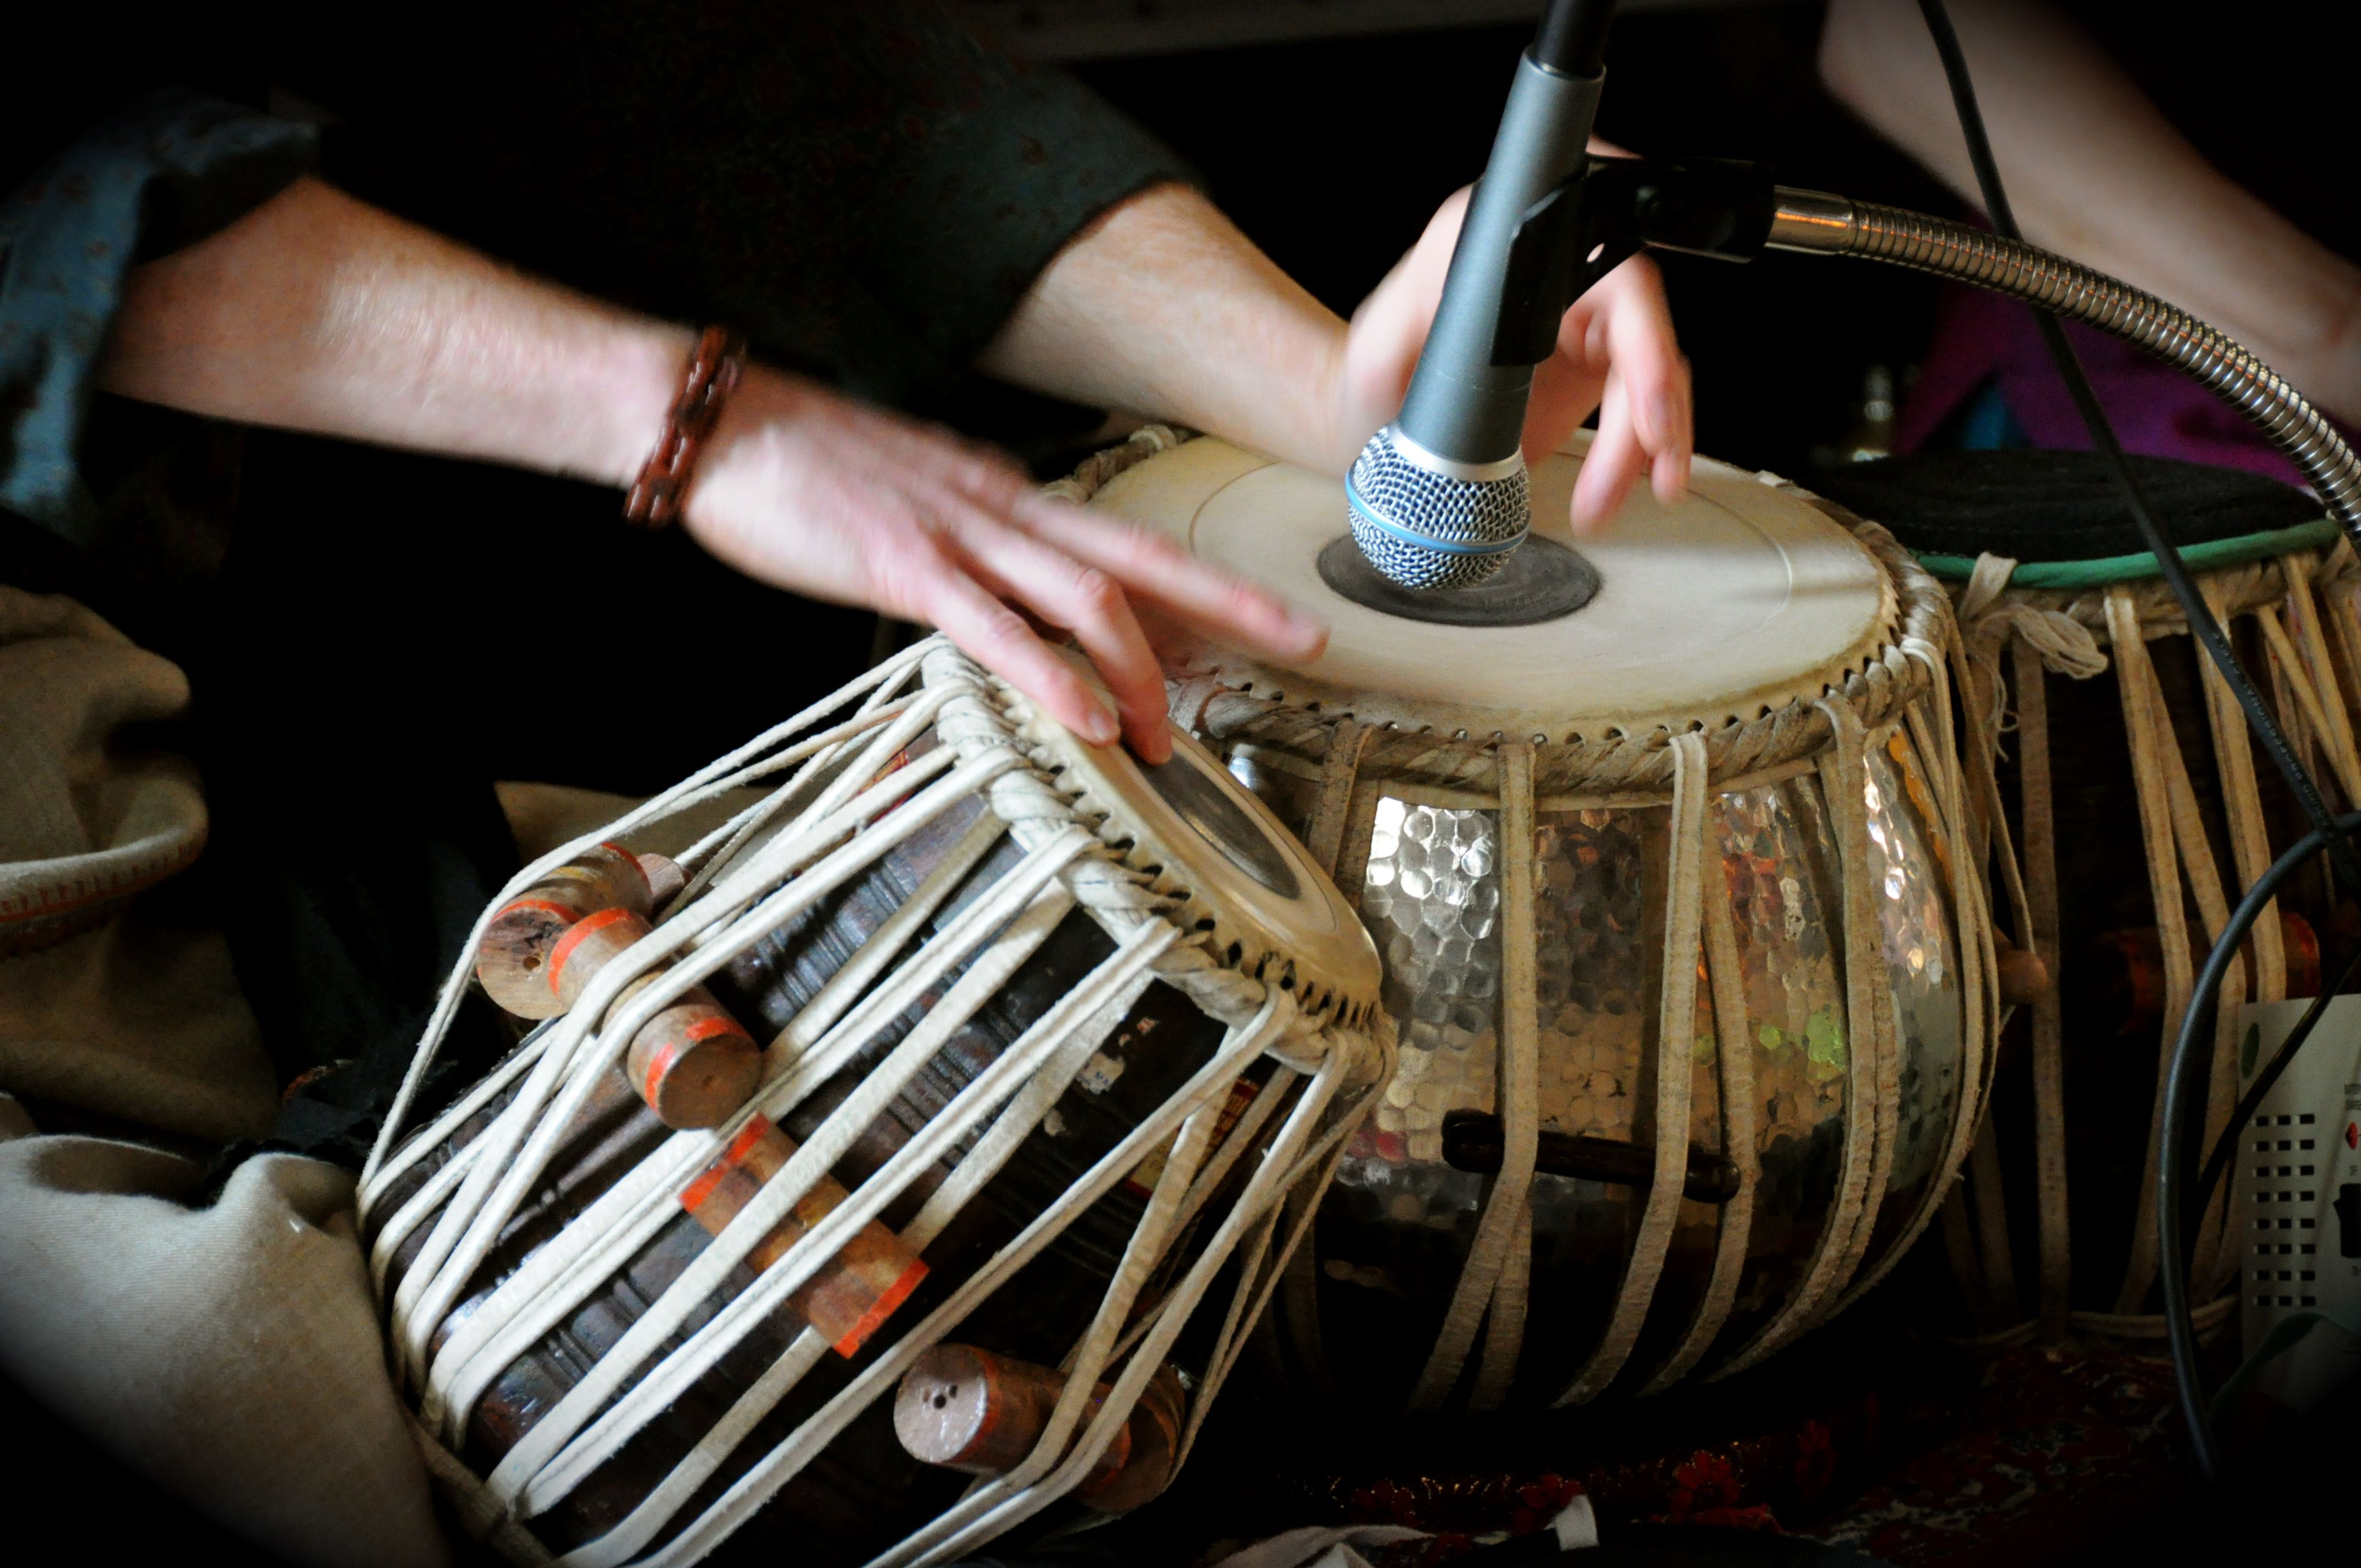 File:Tabla, musical instrument..JPG - Wikimedia Commons